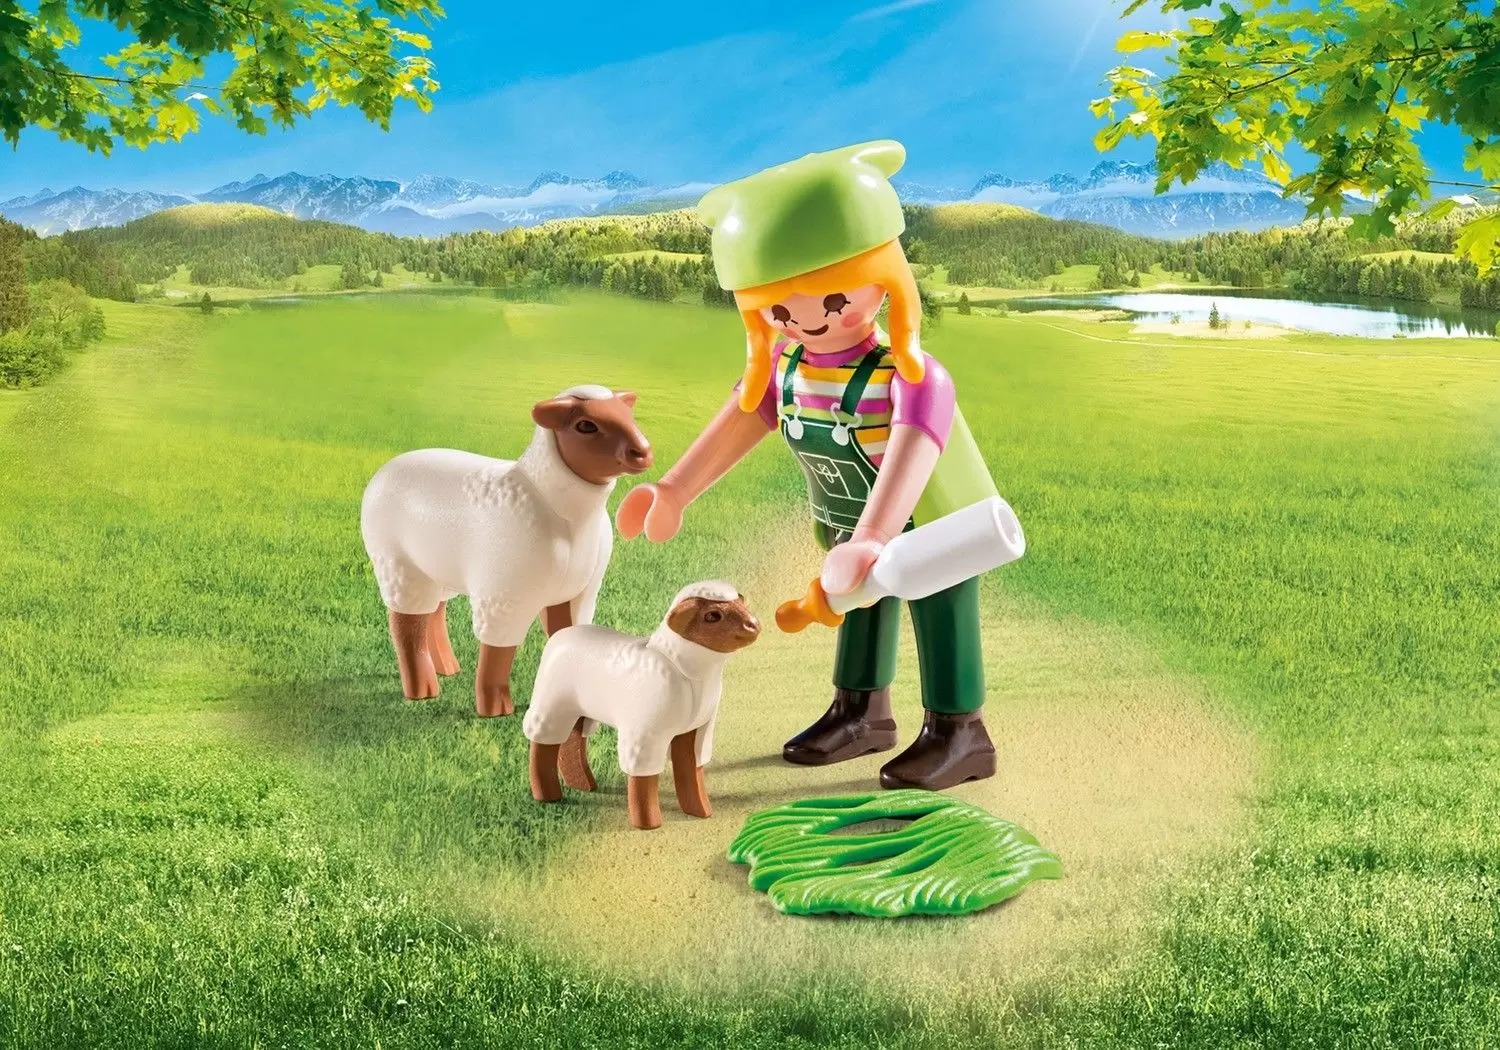 Playmobil SpecialPlus - Peasant Woman and Sheep